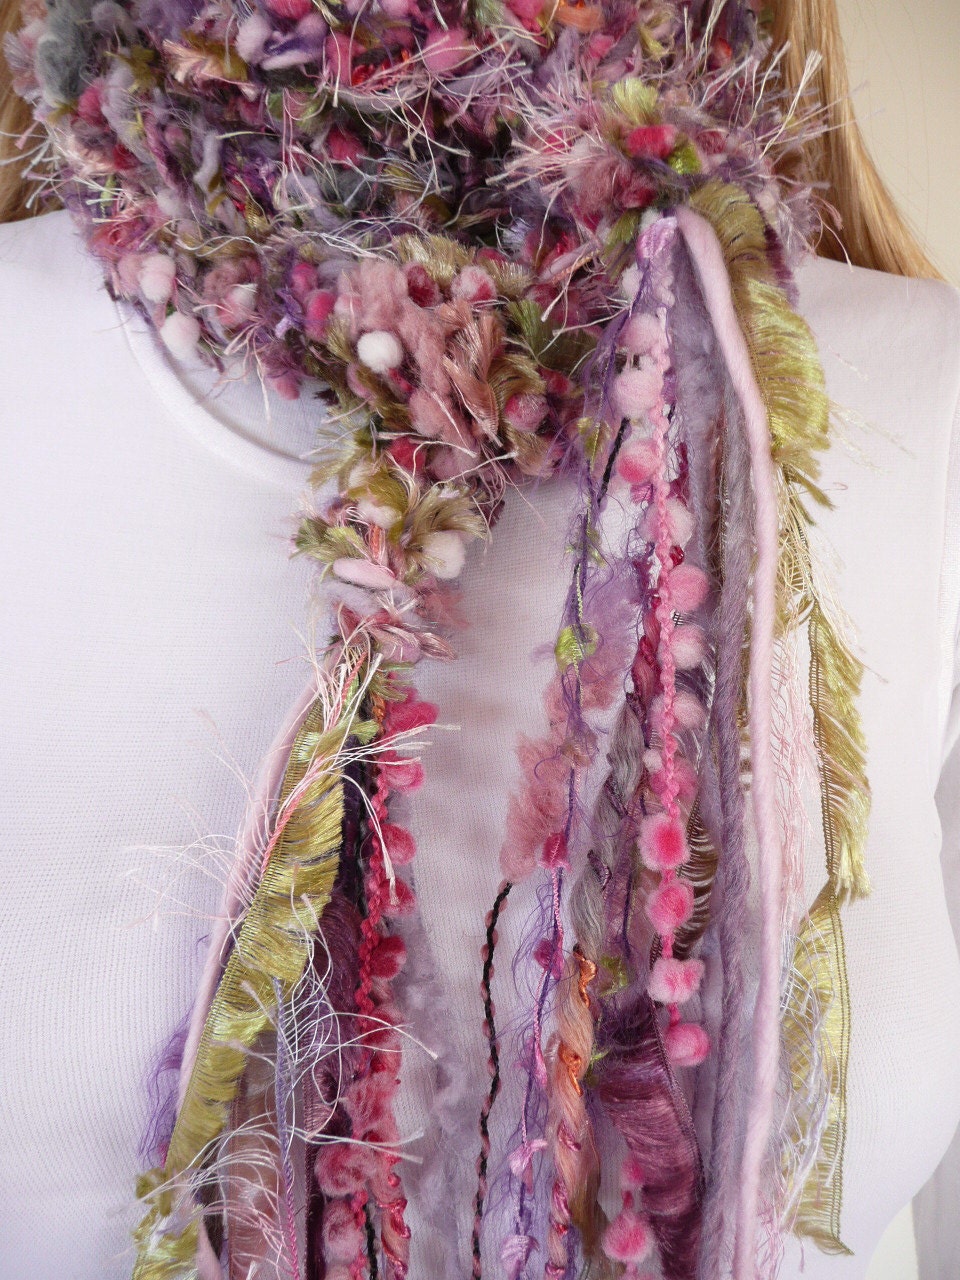 Crochet long skinny scarf - purple pink green - 11 beautiful yarns - long scarf with tassels - quality winter fashion - OOAK